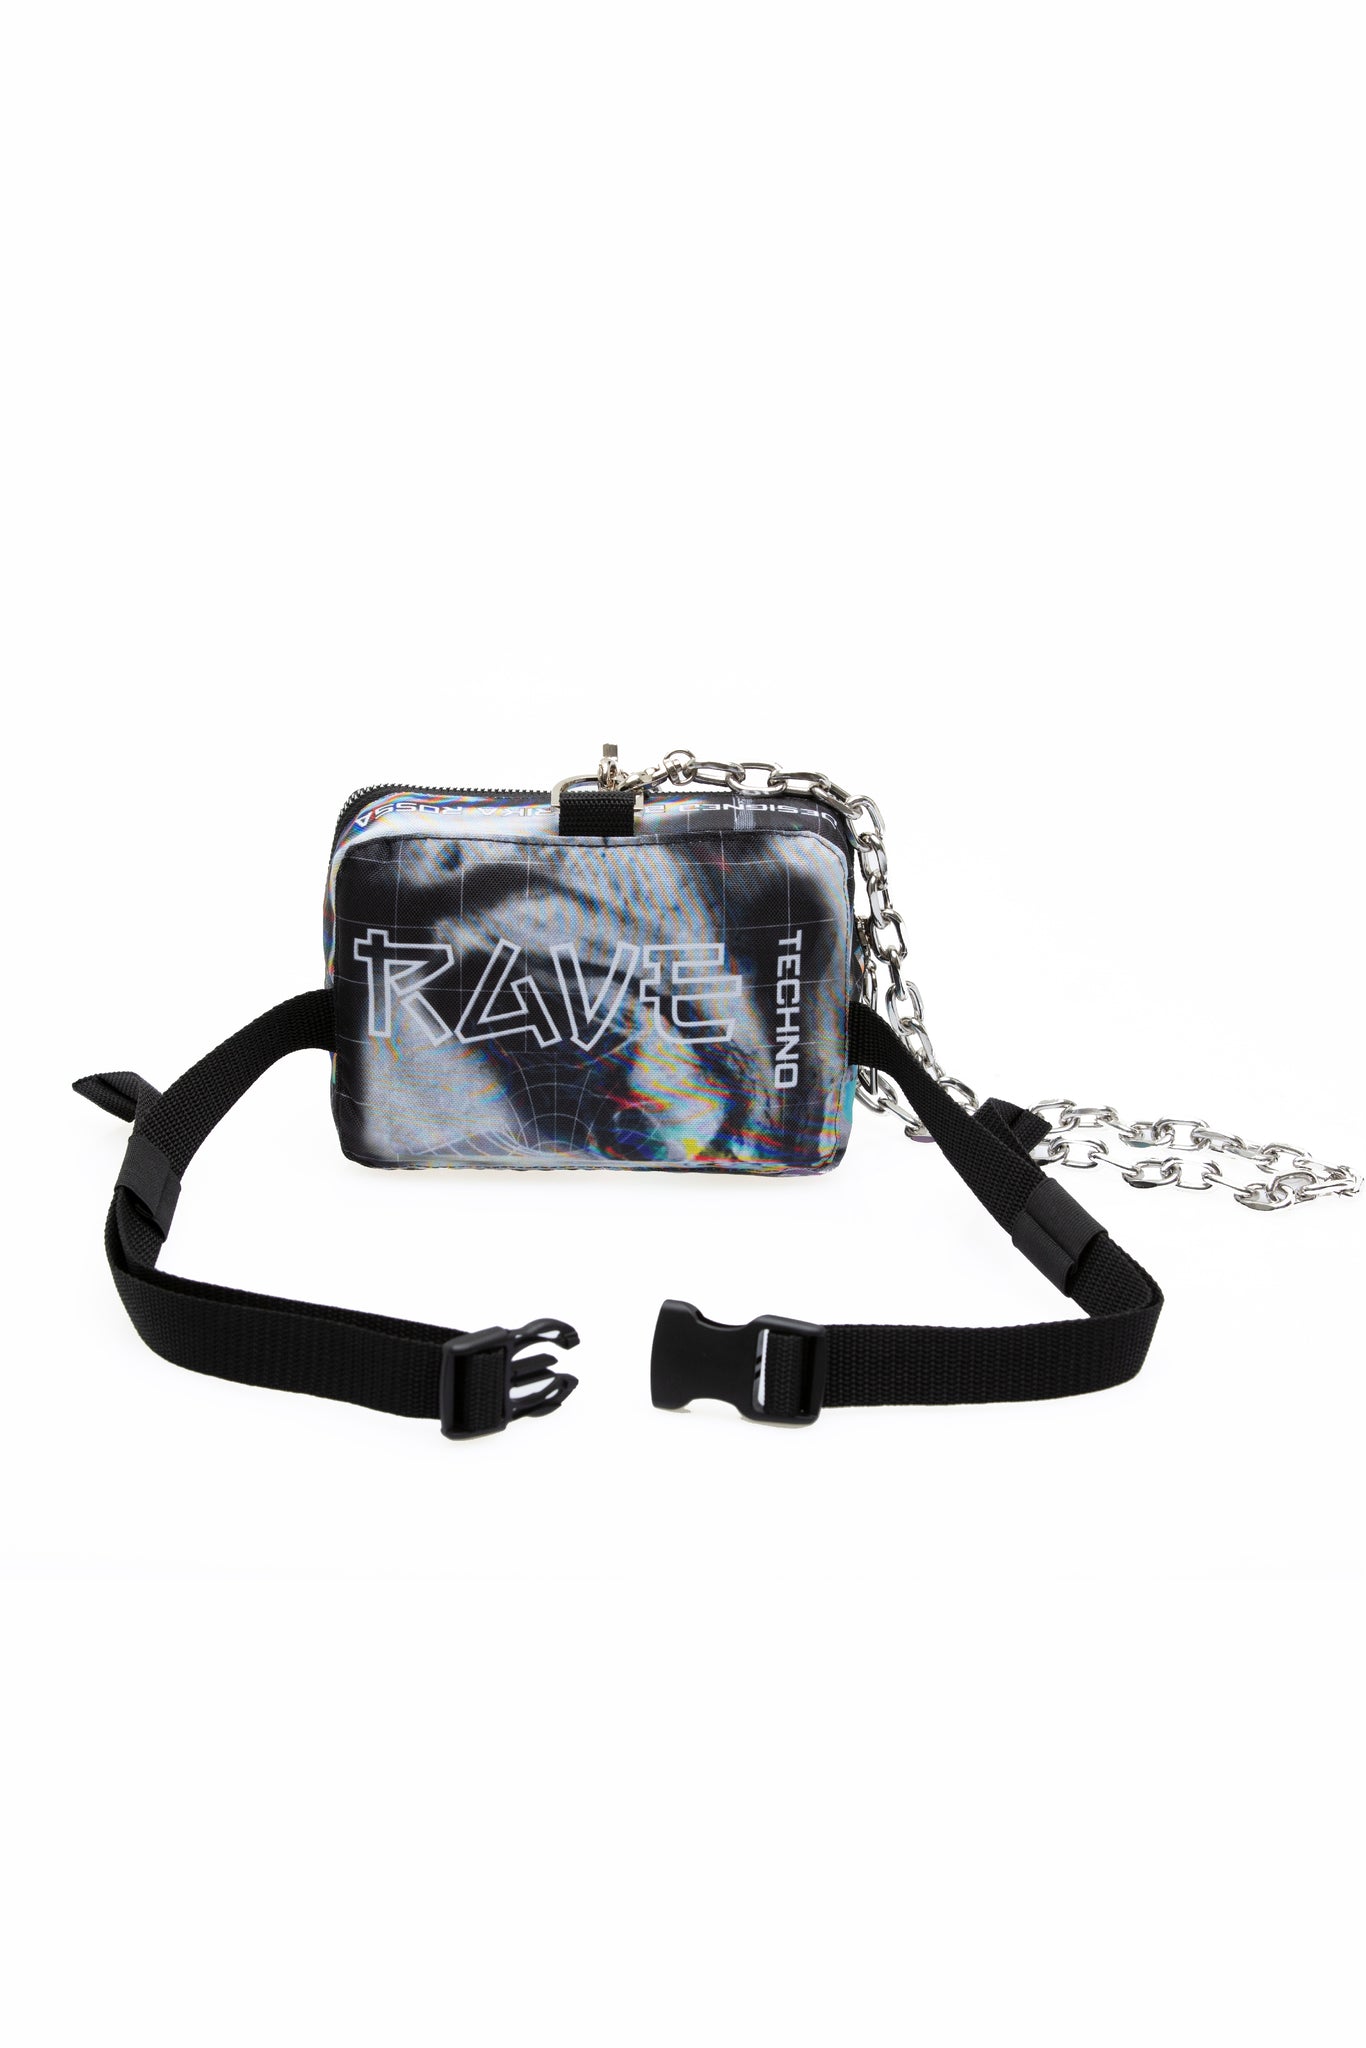 Rave TV 2-way chest/bum bag